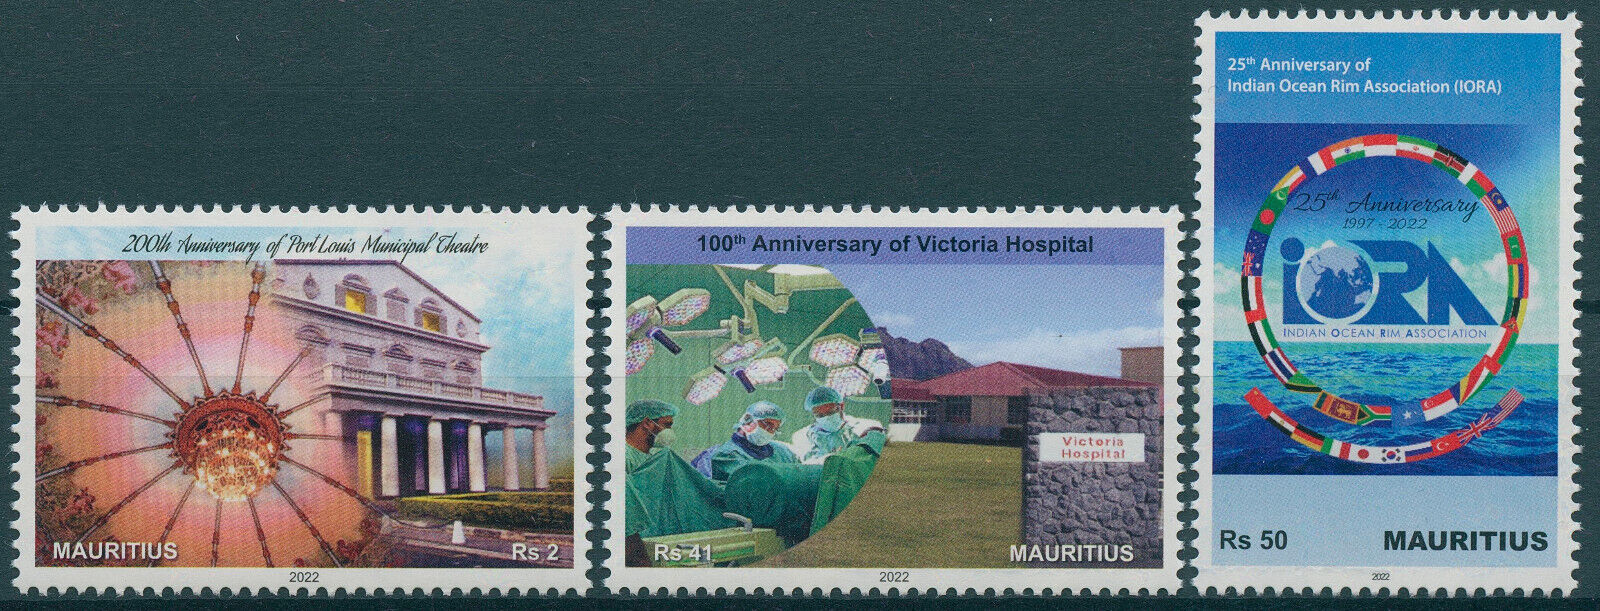 Mauritius 2022 MNH Anniversaries Stamps IORA Victoria Hospital Theatres 3v Set